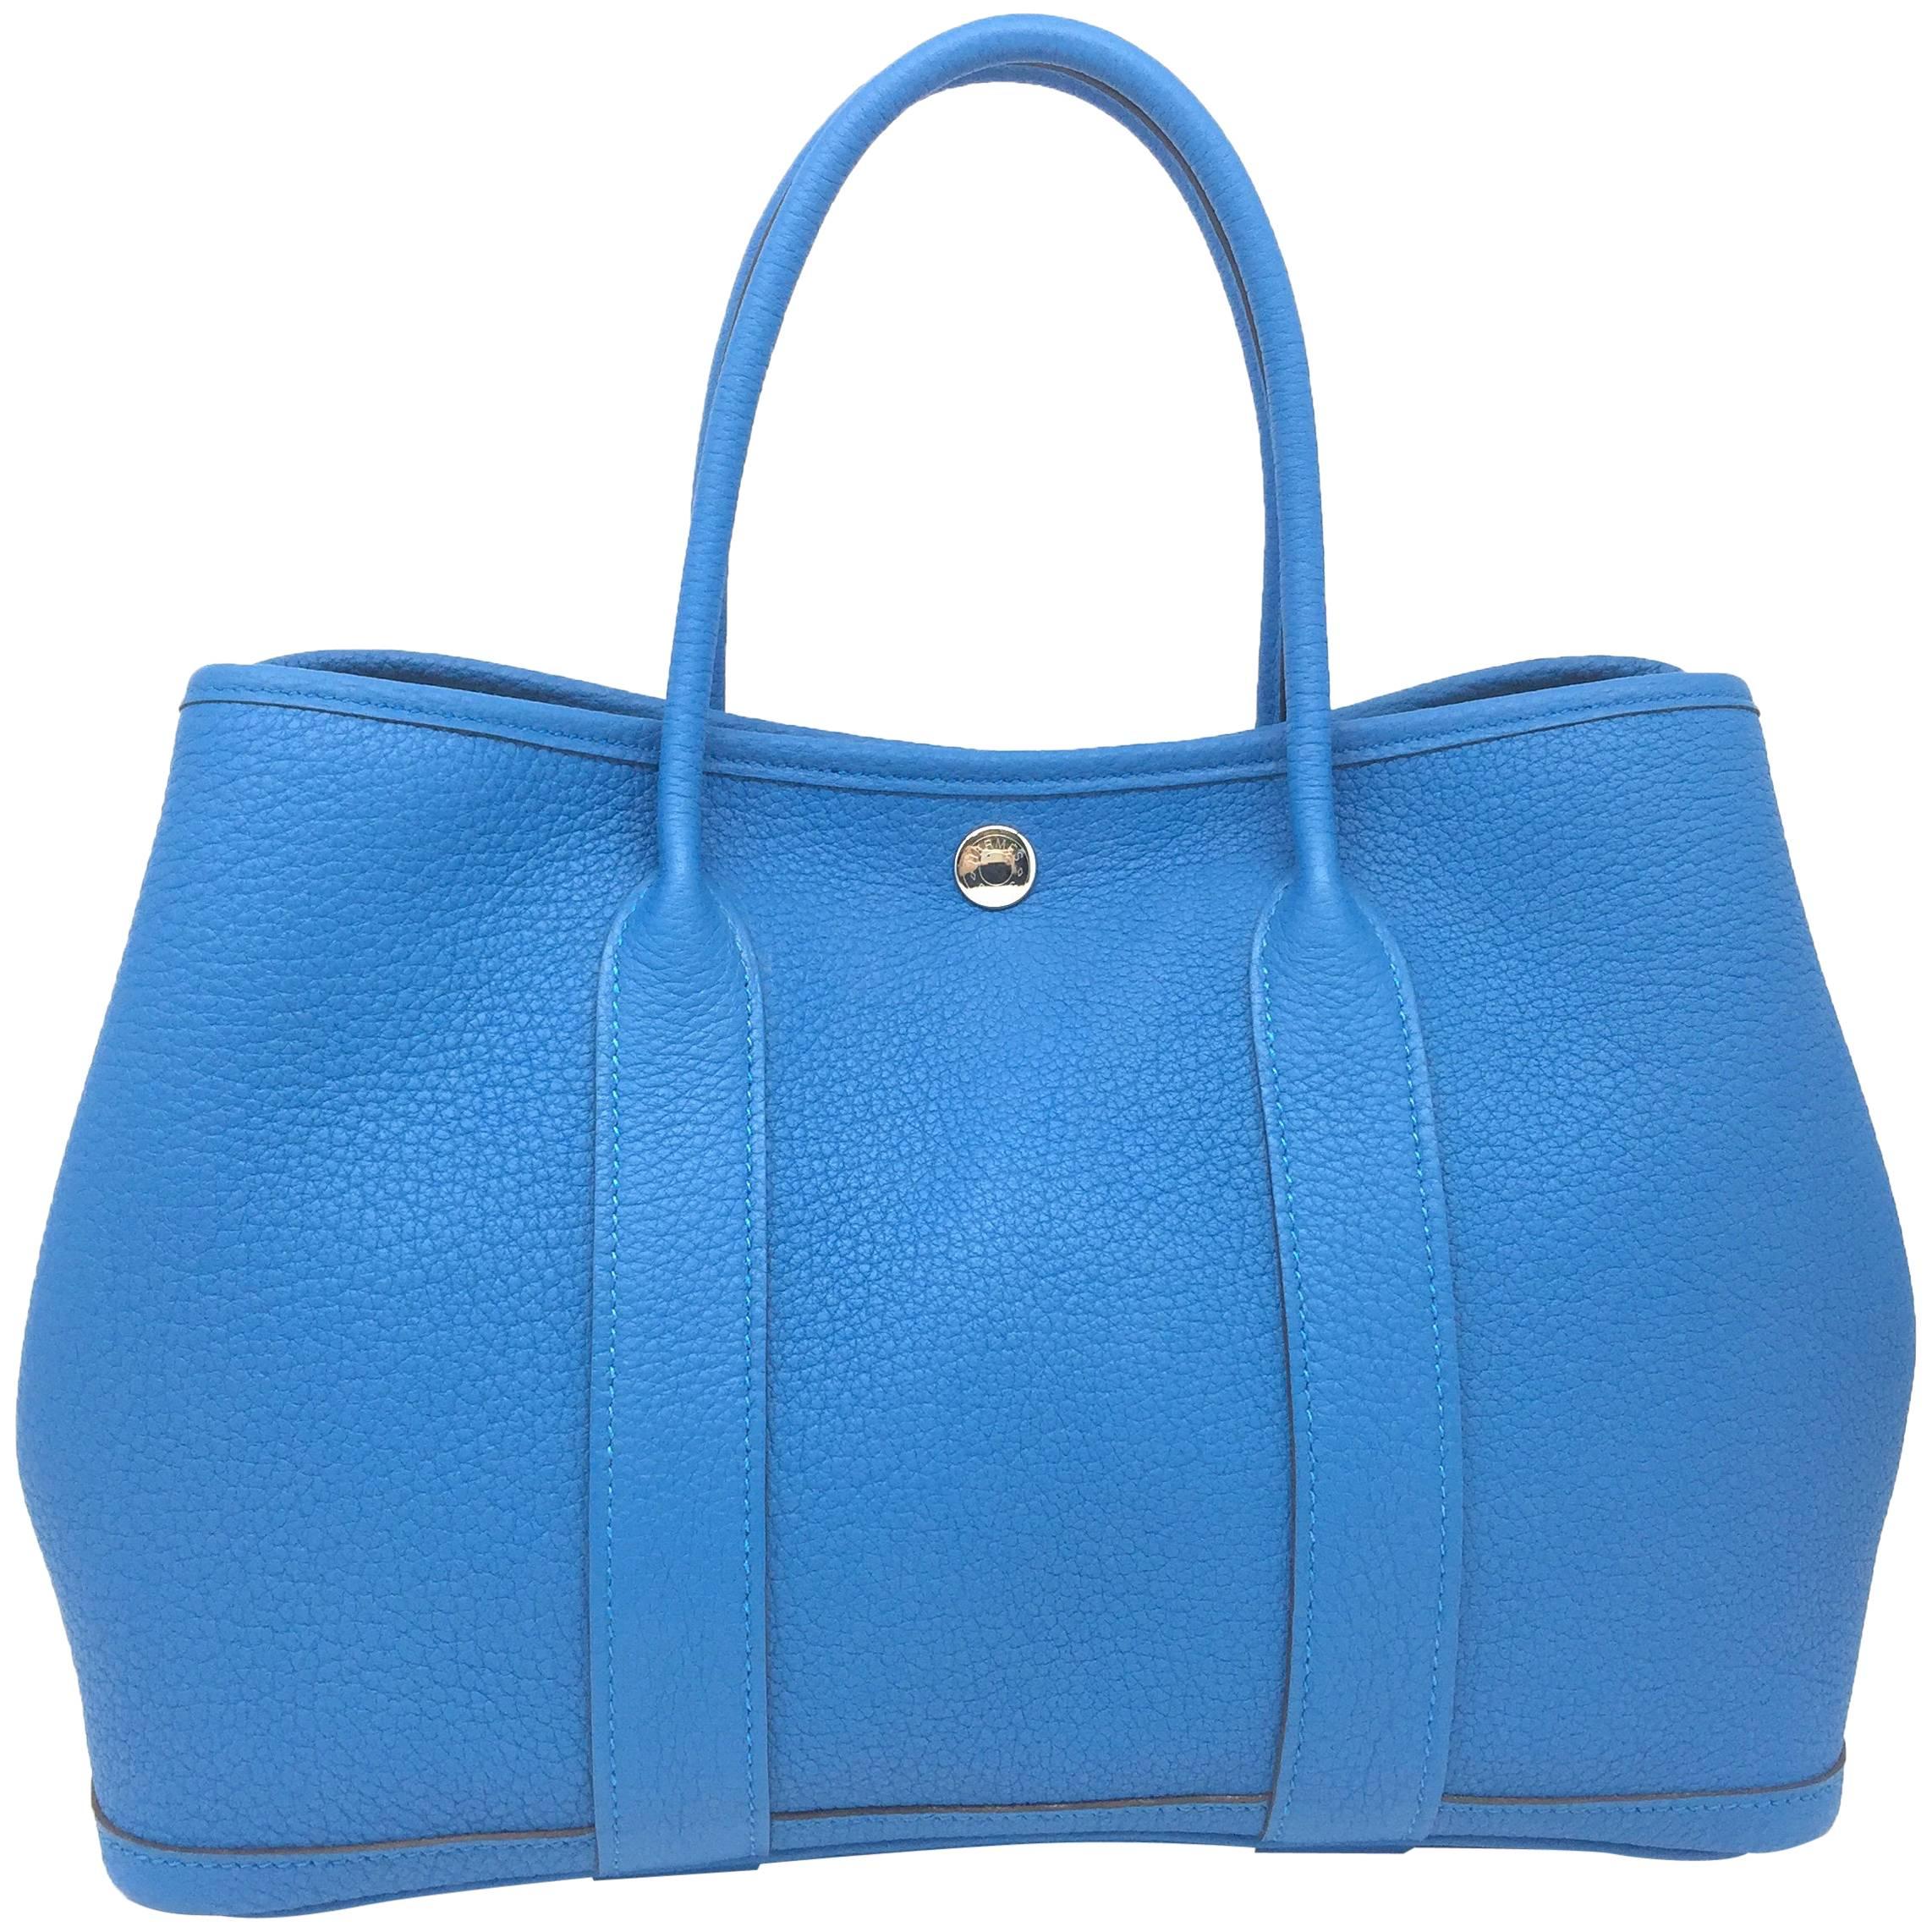 Hermes Garden Party 30 Blue Zanzibar Togo Leather Tote Bag